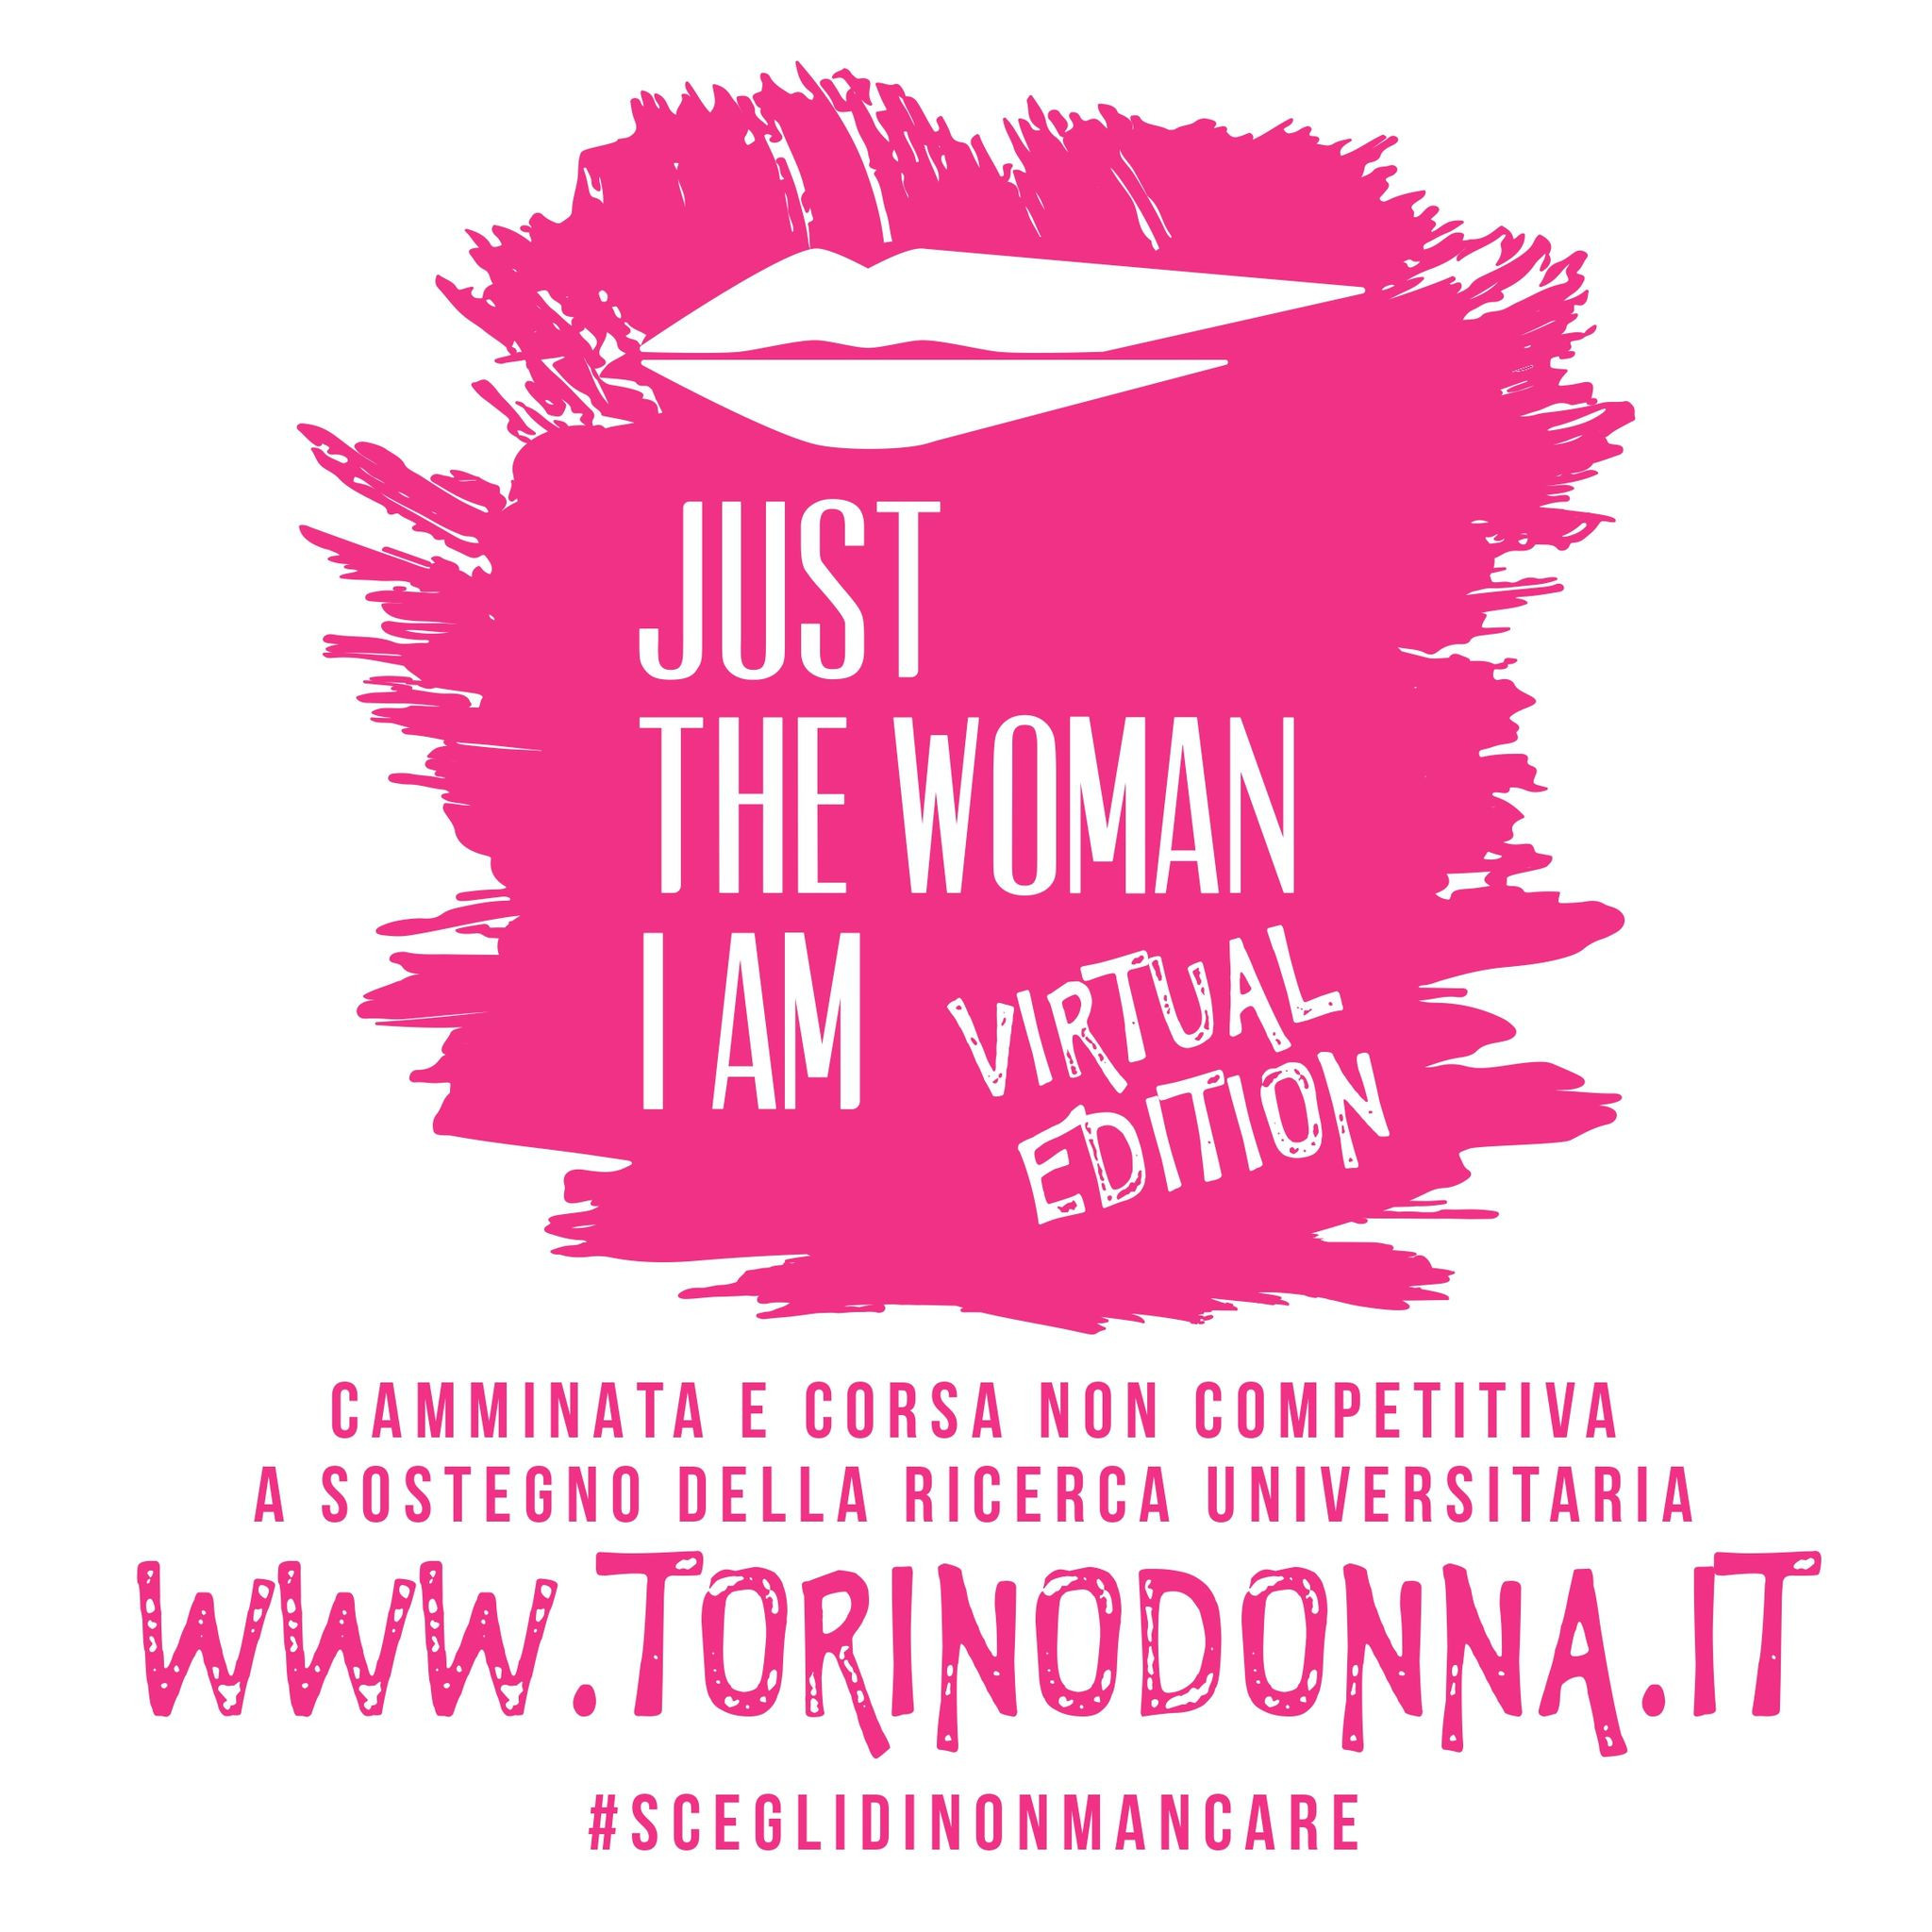 University Sport Center of Turin organises virtual event for International Women's Day